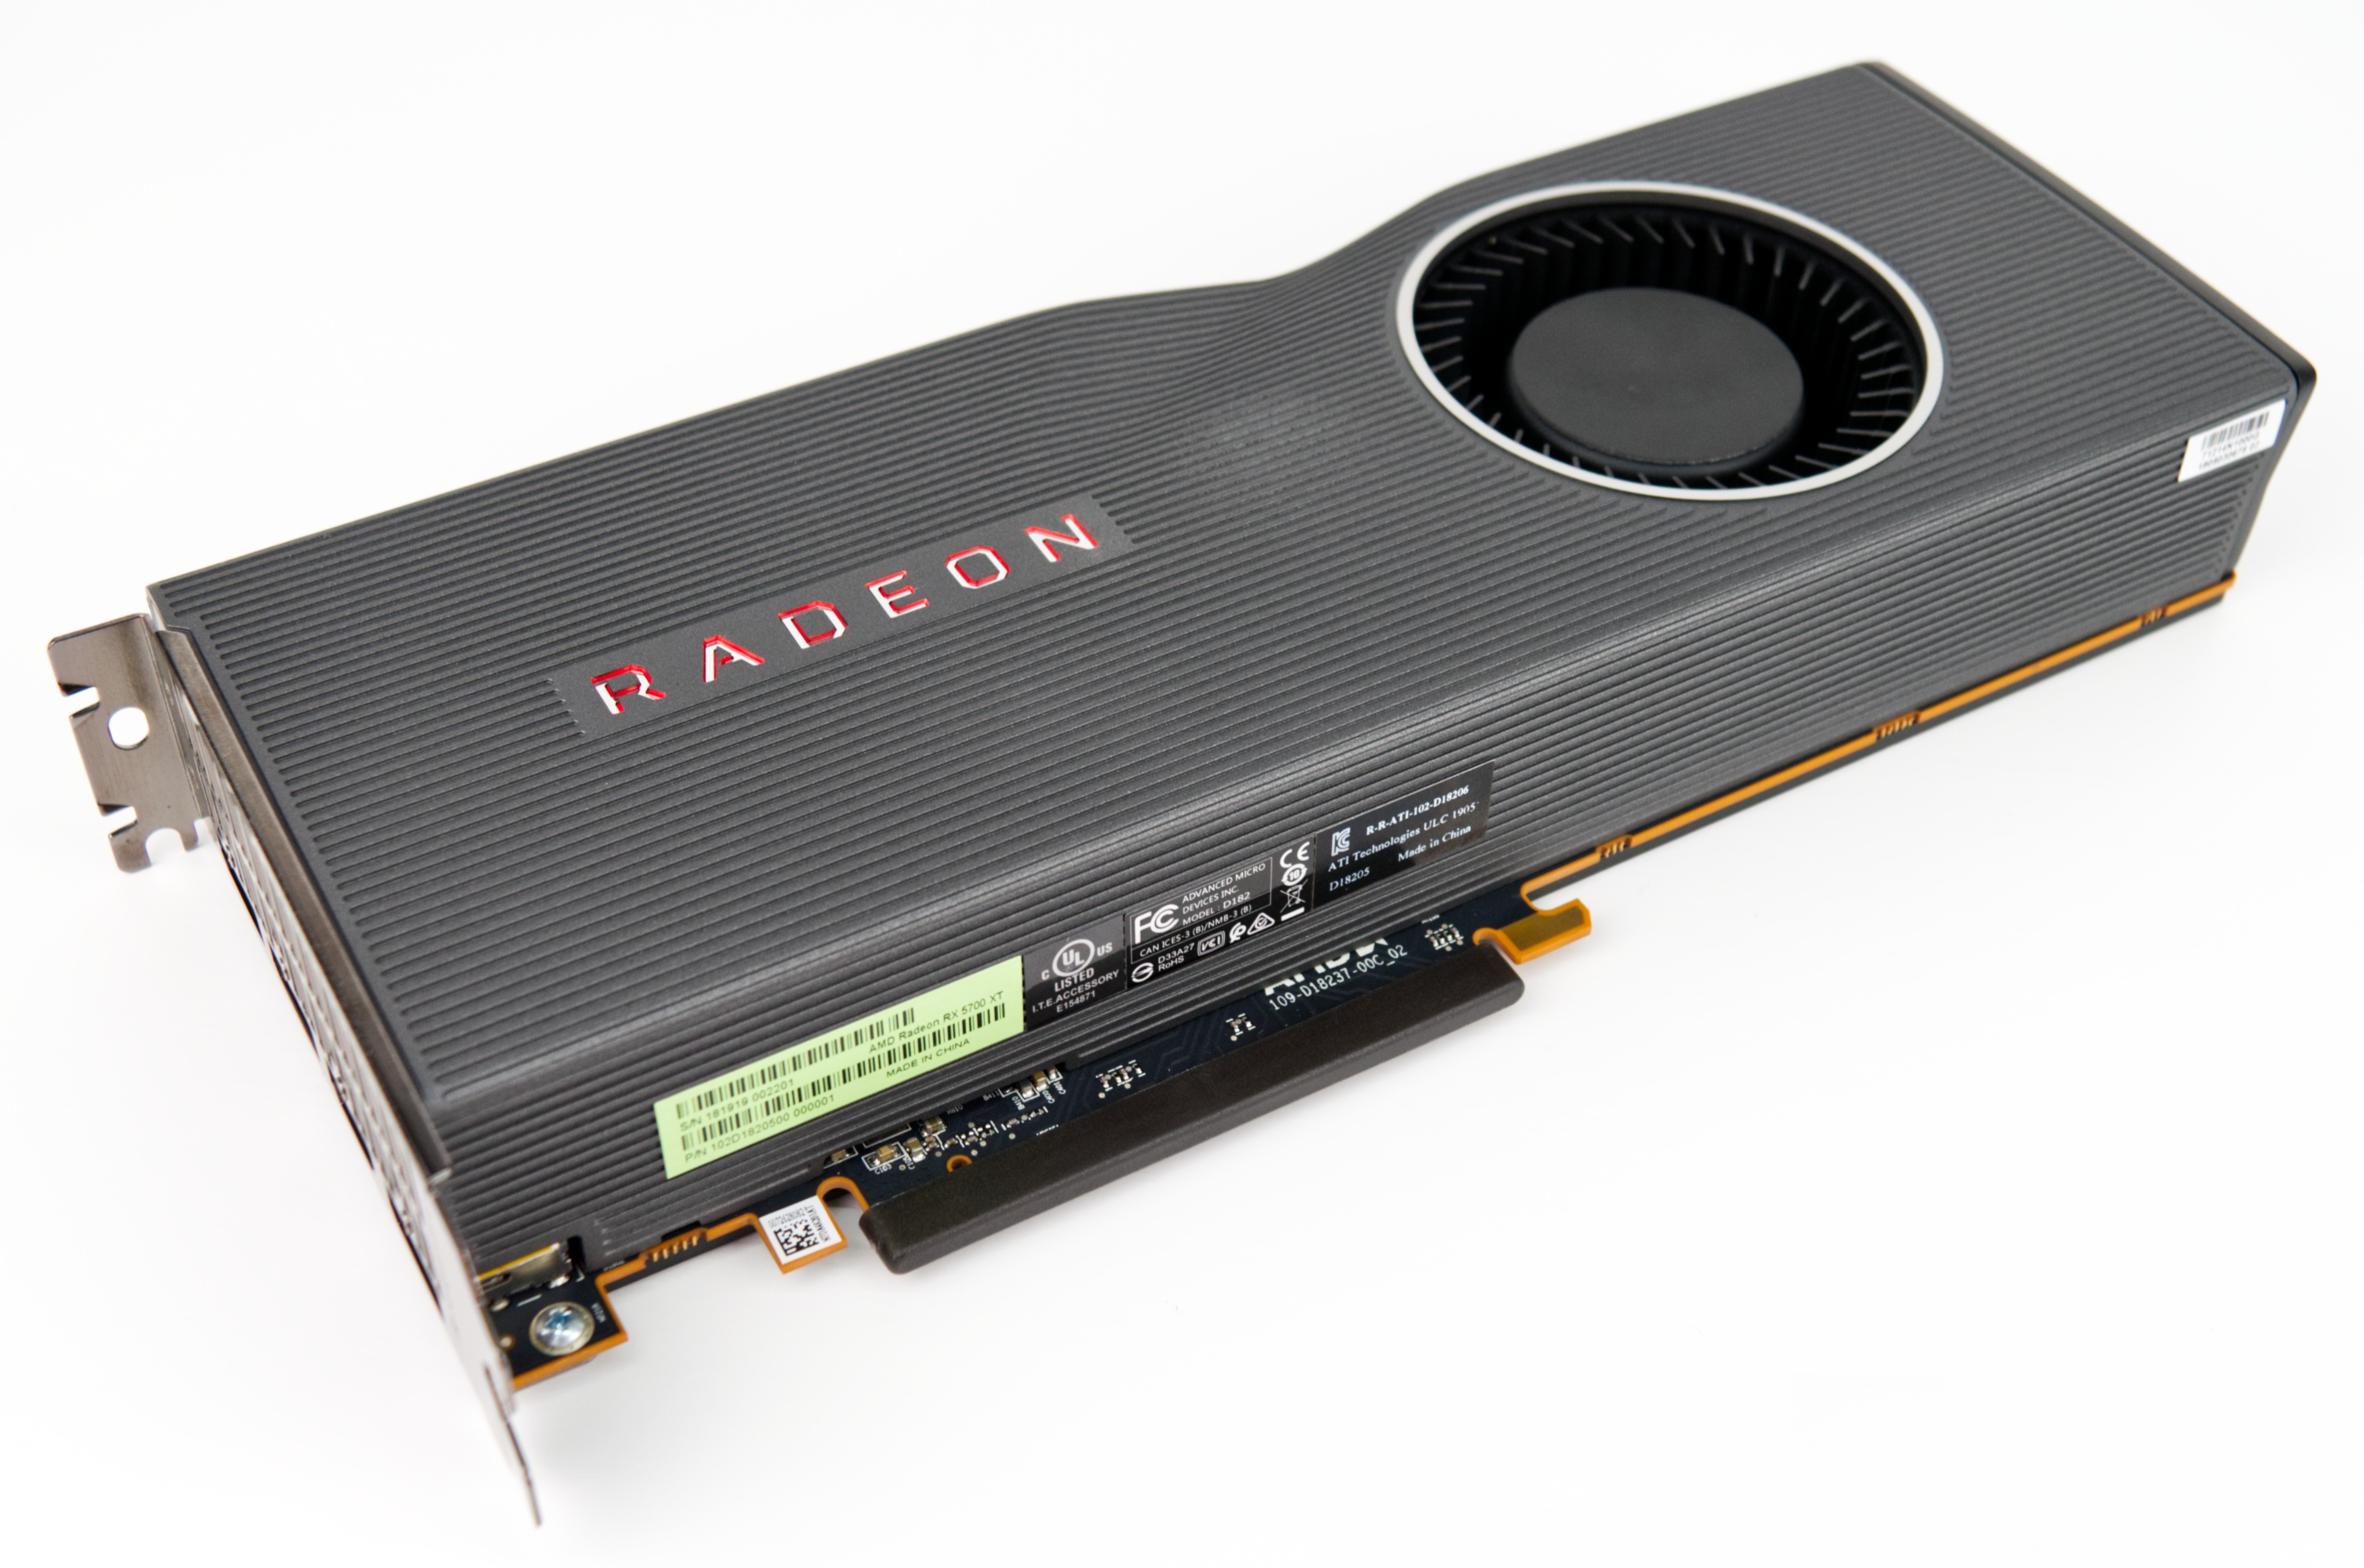 Radeon pro купить. Radeon RX 5700 XT 8gb. RX 5700 XT reference. Видеокарта RX 5700xt 8 GB. AMD RX 5700 XT.